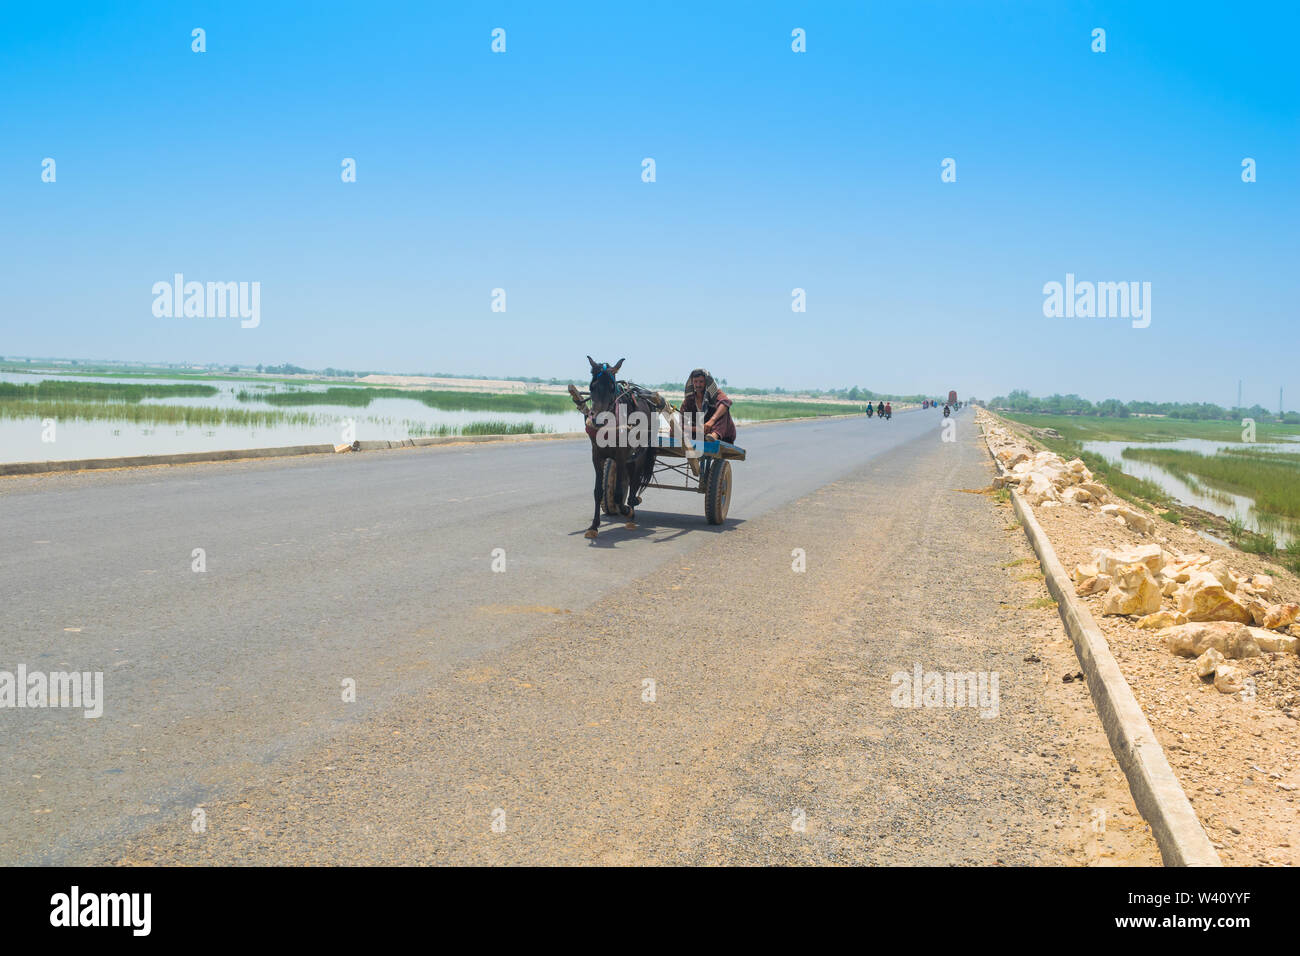 Rahim yar khan, Punjab,Pakistan-June 23,2019: a villager sitting on a horse cart on a high way,a man is driving a horse cart on a road. Stock Photo